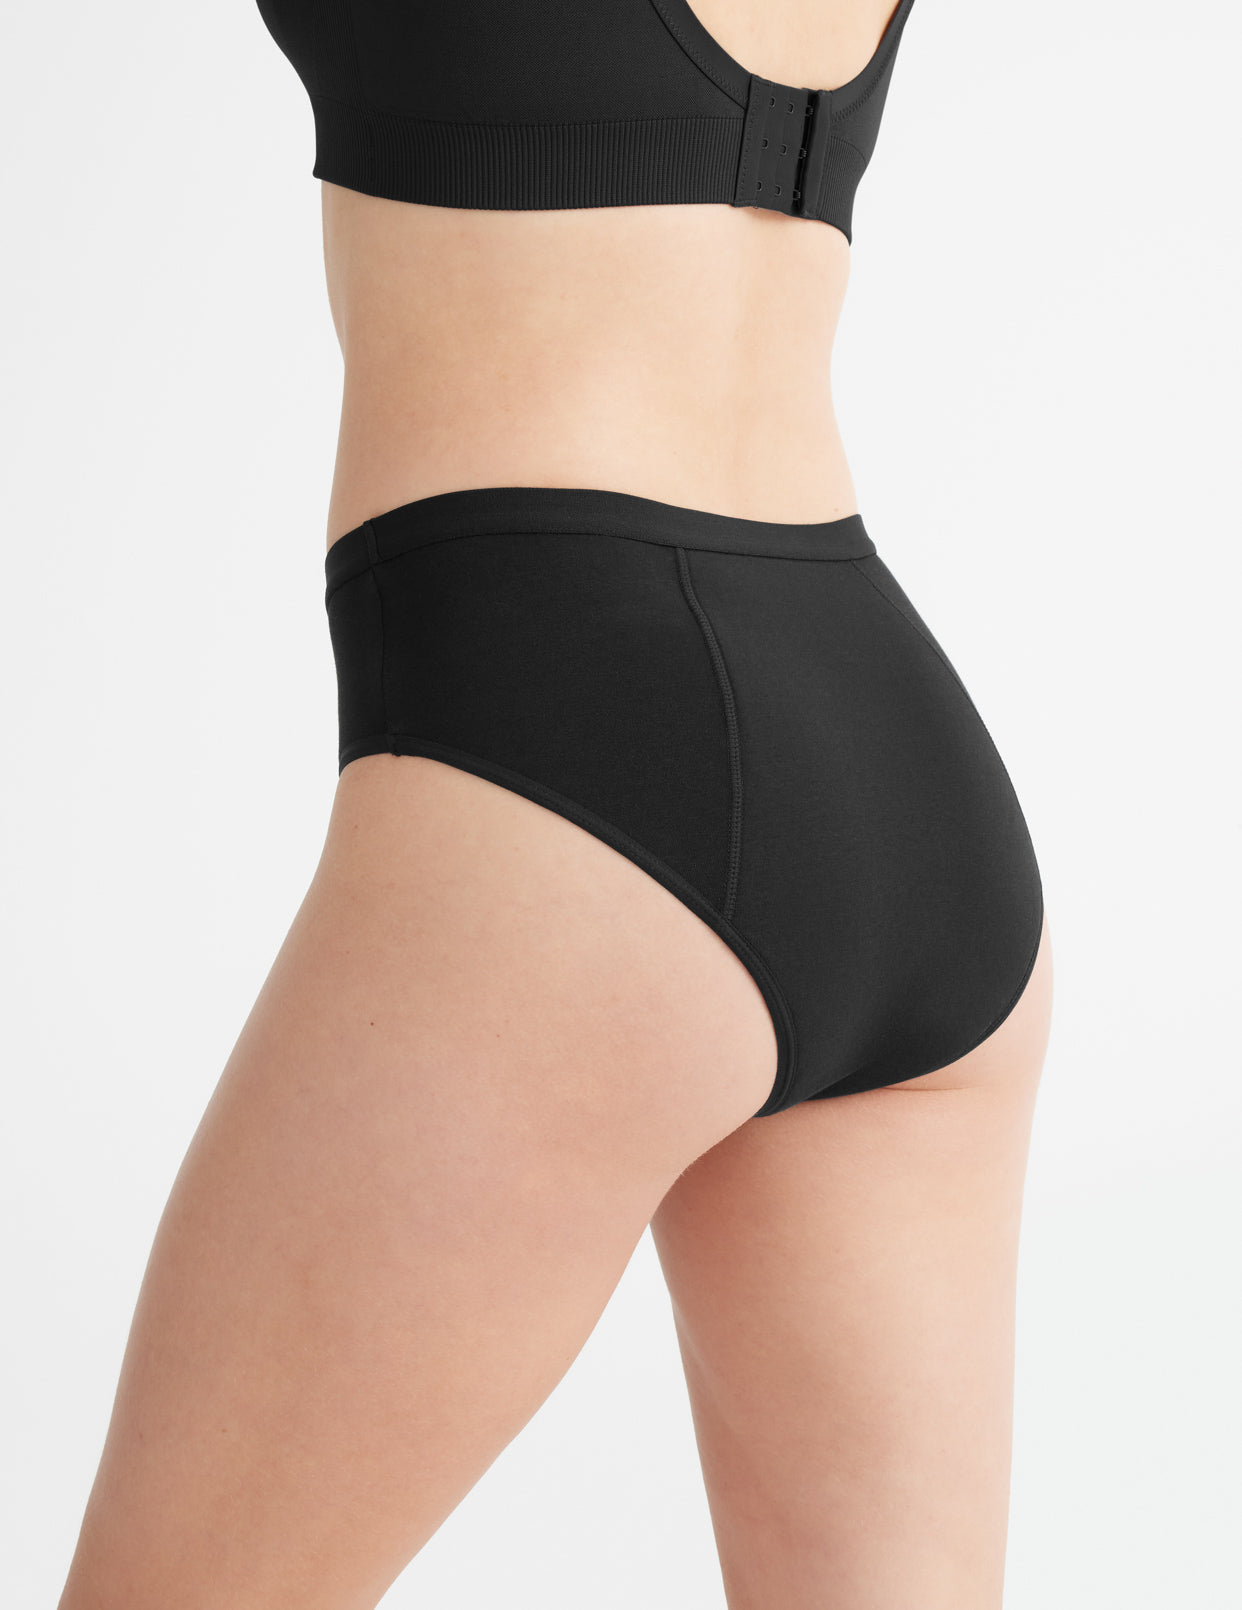 Modal Lite Extra Soft, Bikini Cut Women's Underwear (2-pack) – More Than  Basics